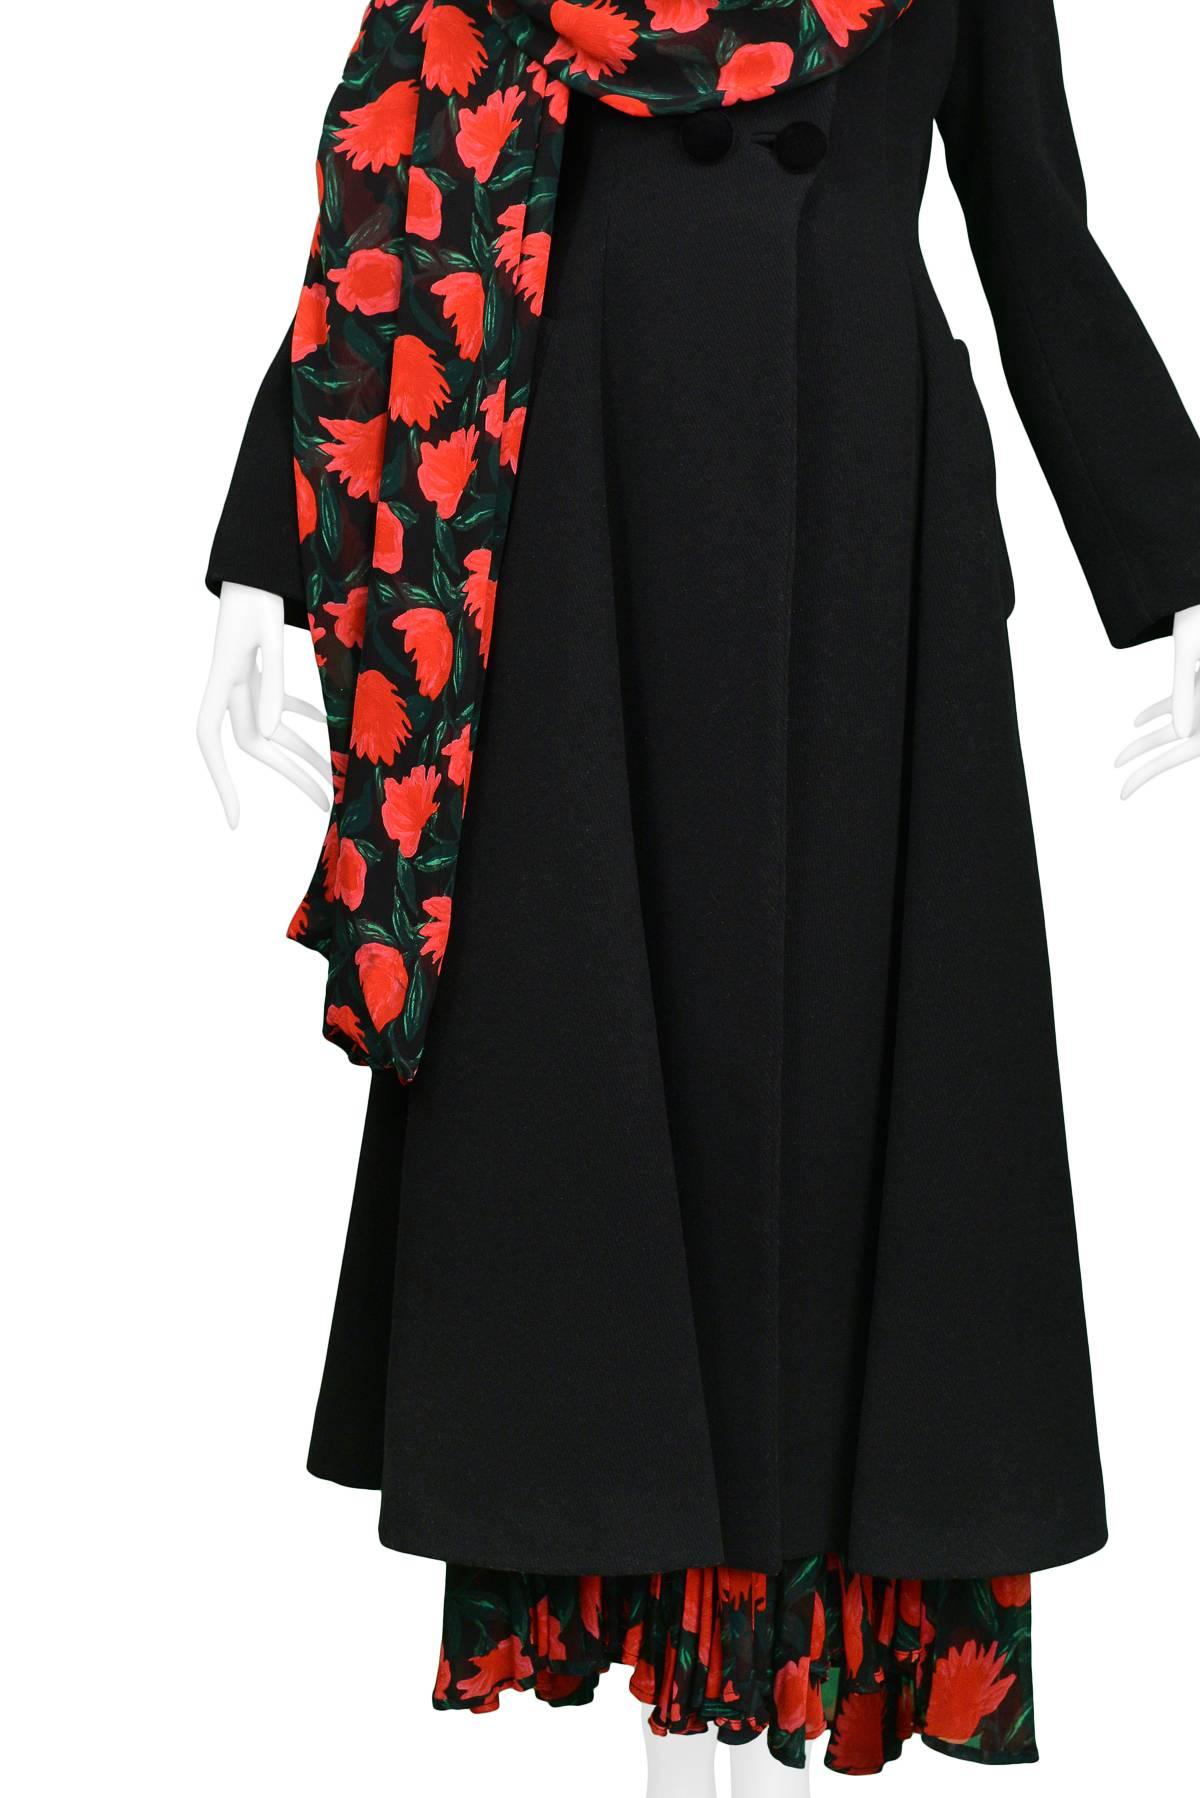 Women's Dolce & Gabbana Black Wool and Velvet Floral Shawl Coat 1990s